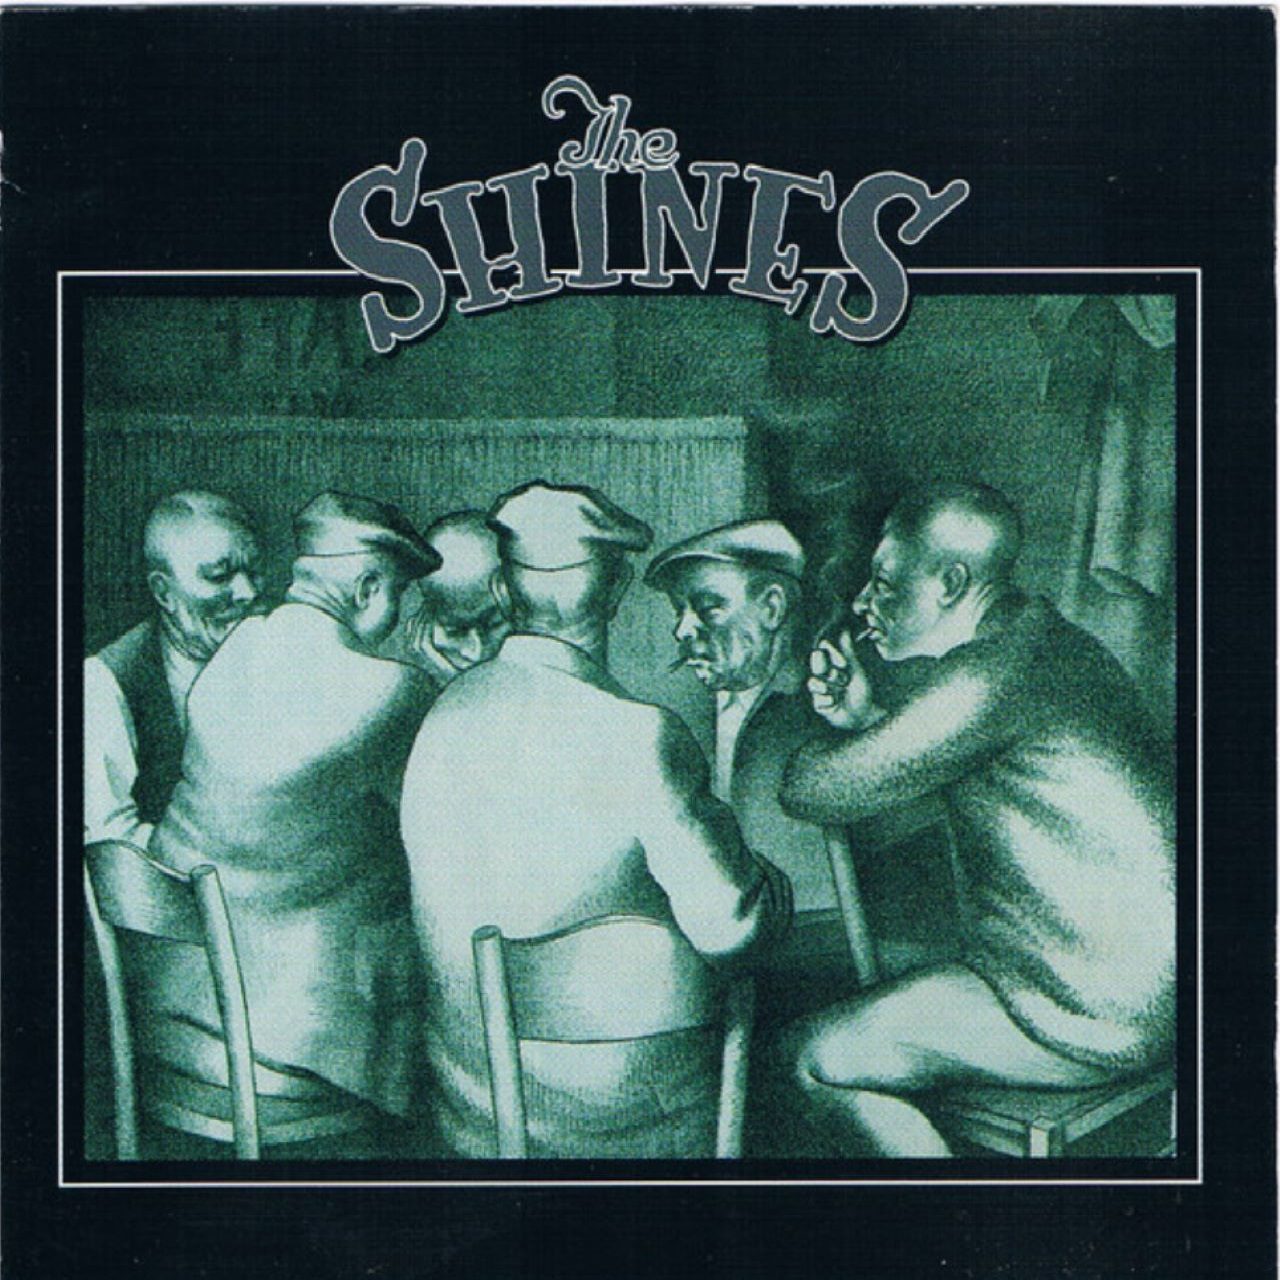 Shines – The Shines cover album